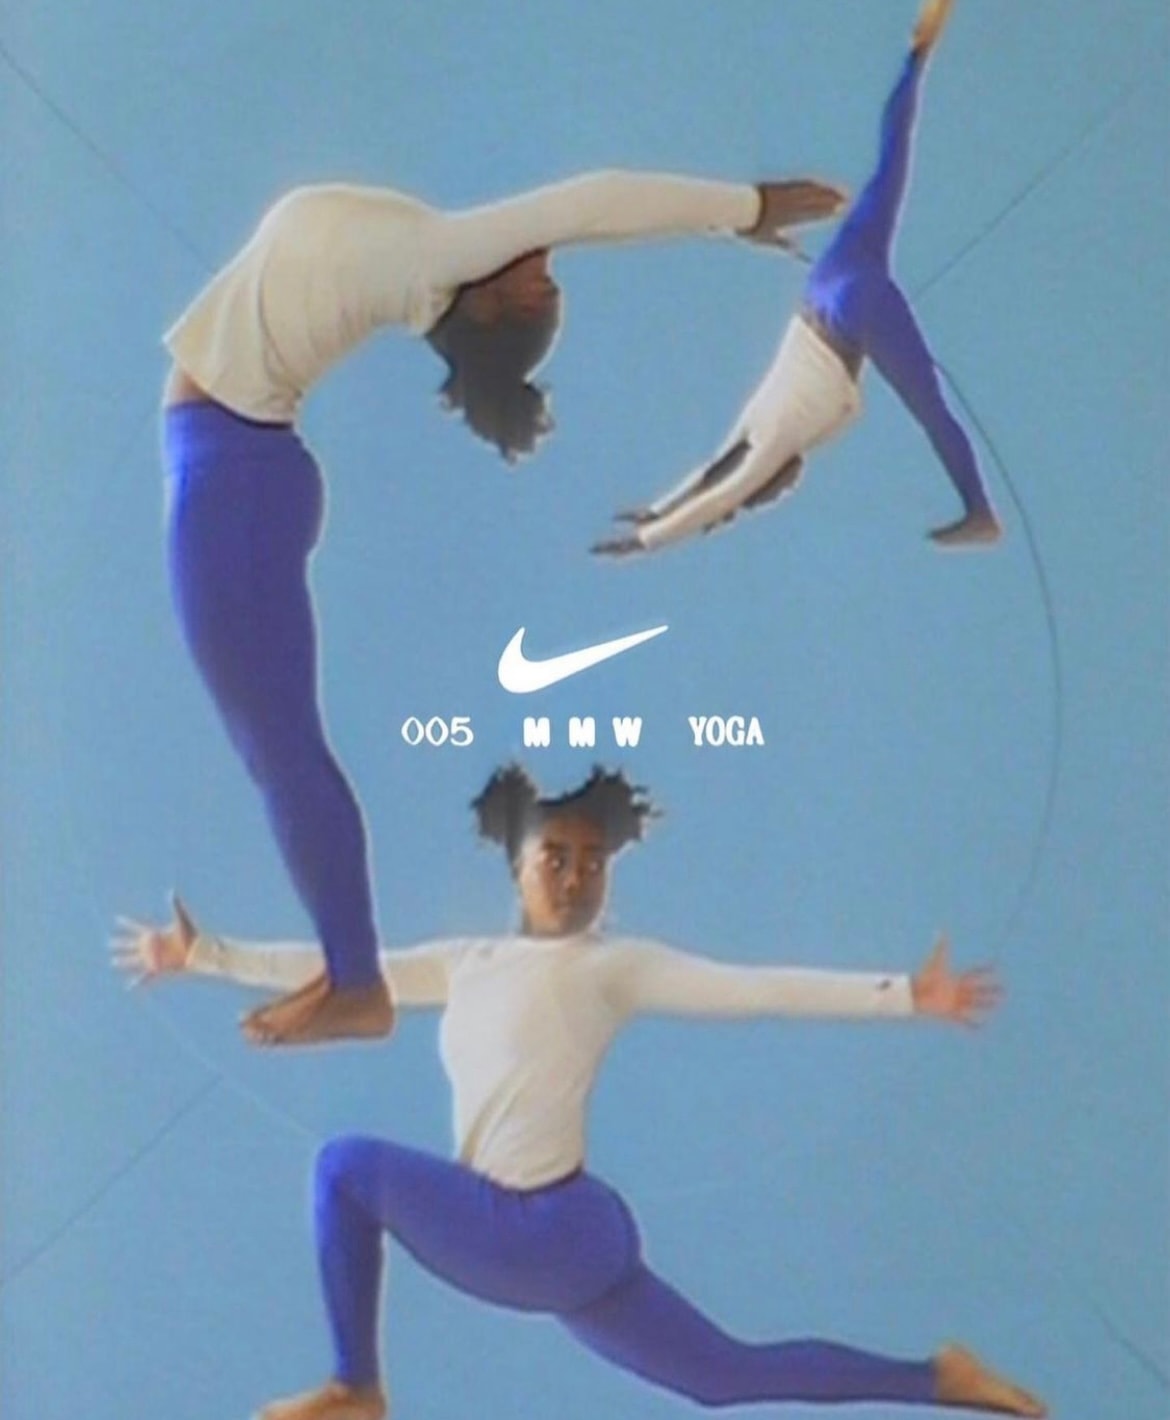 Nike X Matthew M. Williams 最新聯名瑜伽系列「005 MMW YOGA」正式登場